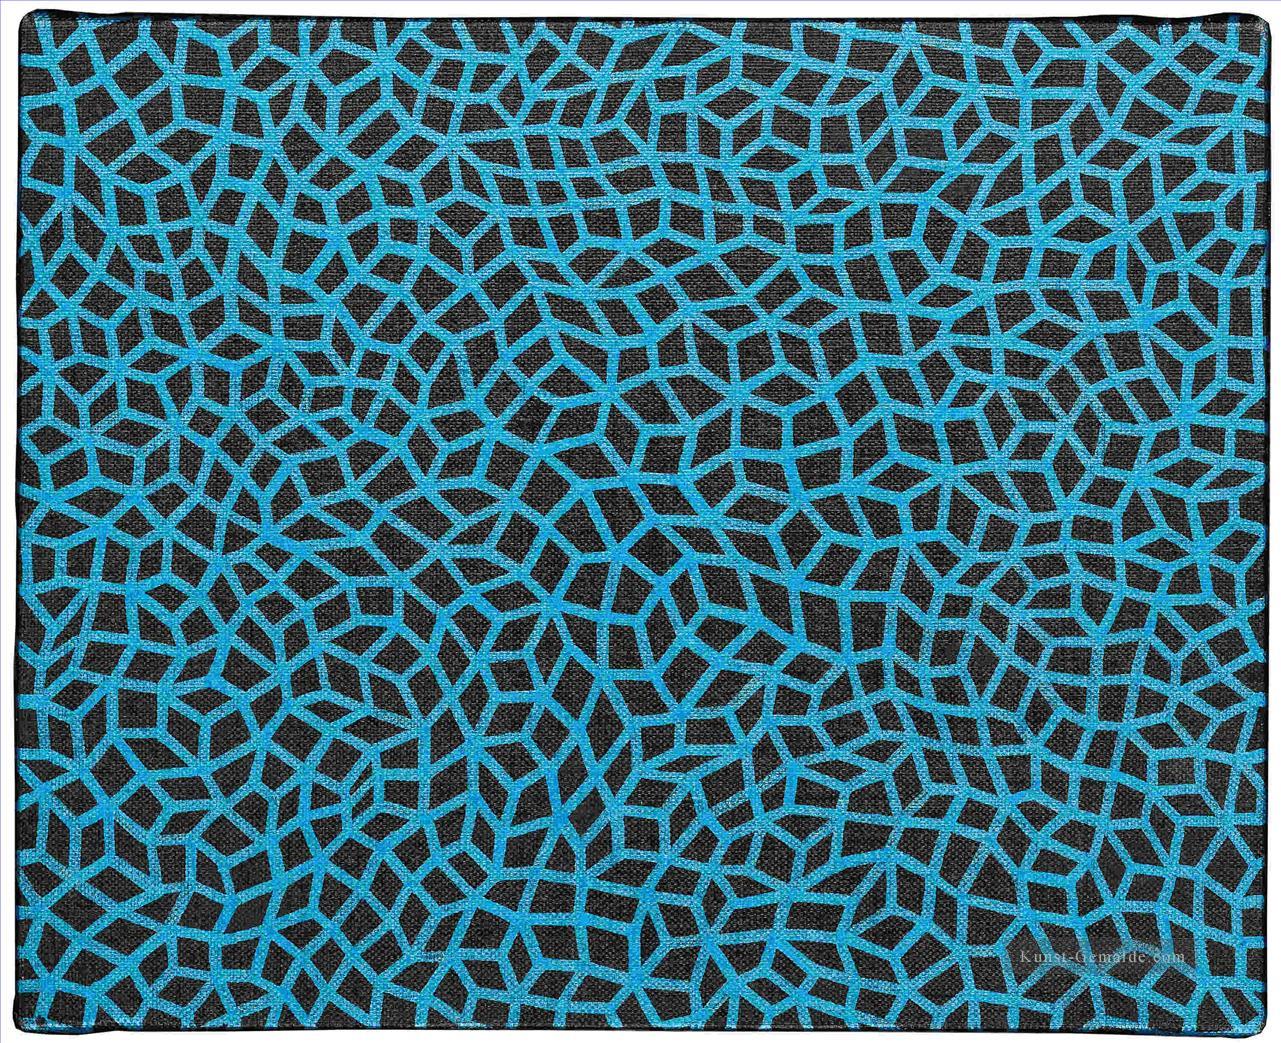 Infinity Nets blue Yayoi Kusama Pop art minimalistisch feministisch Ölgemälde